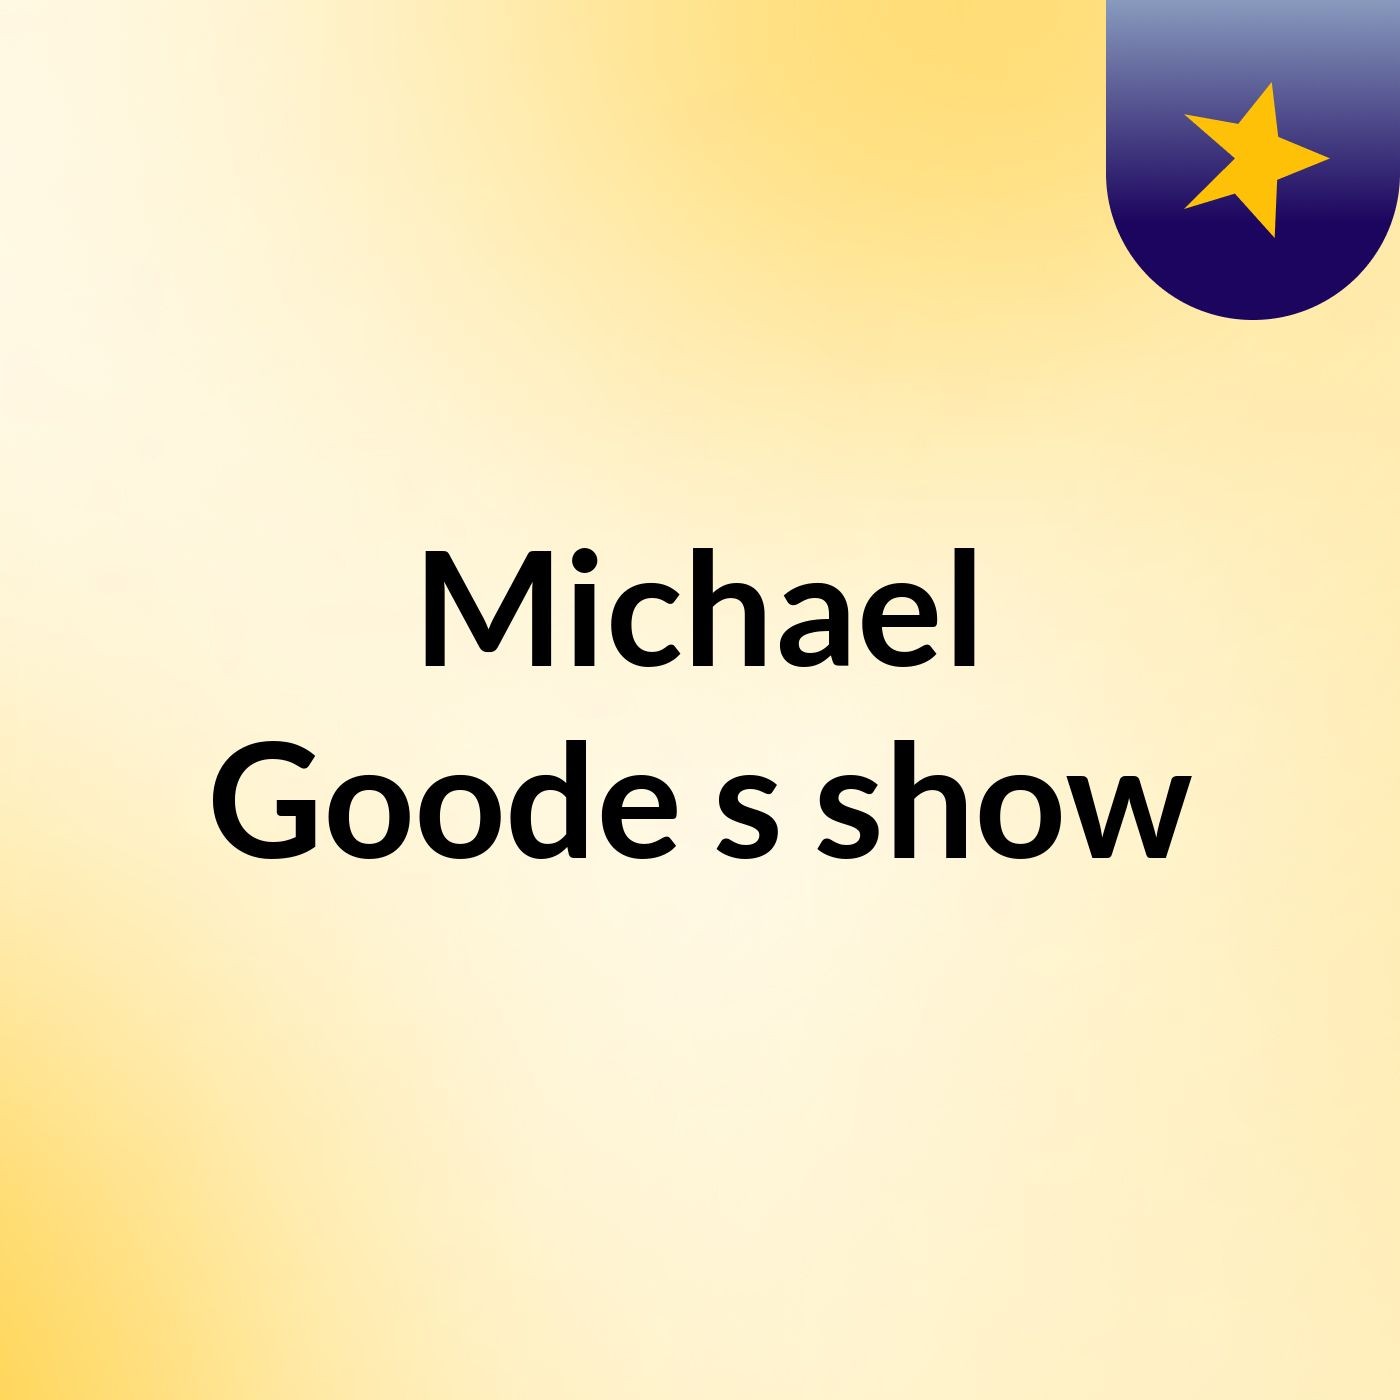 Episode 7 - Michael Goode's show